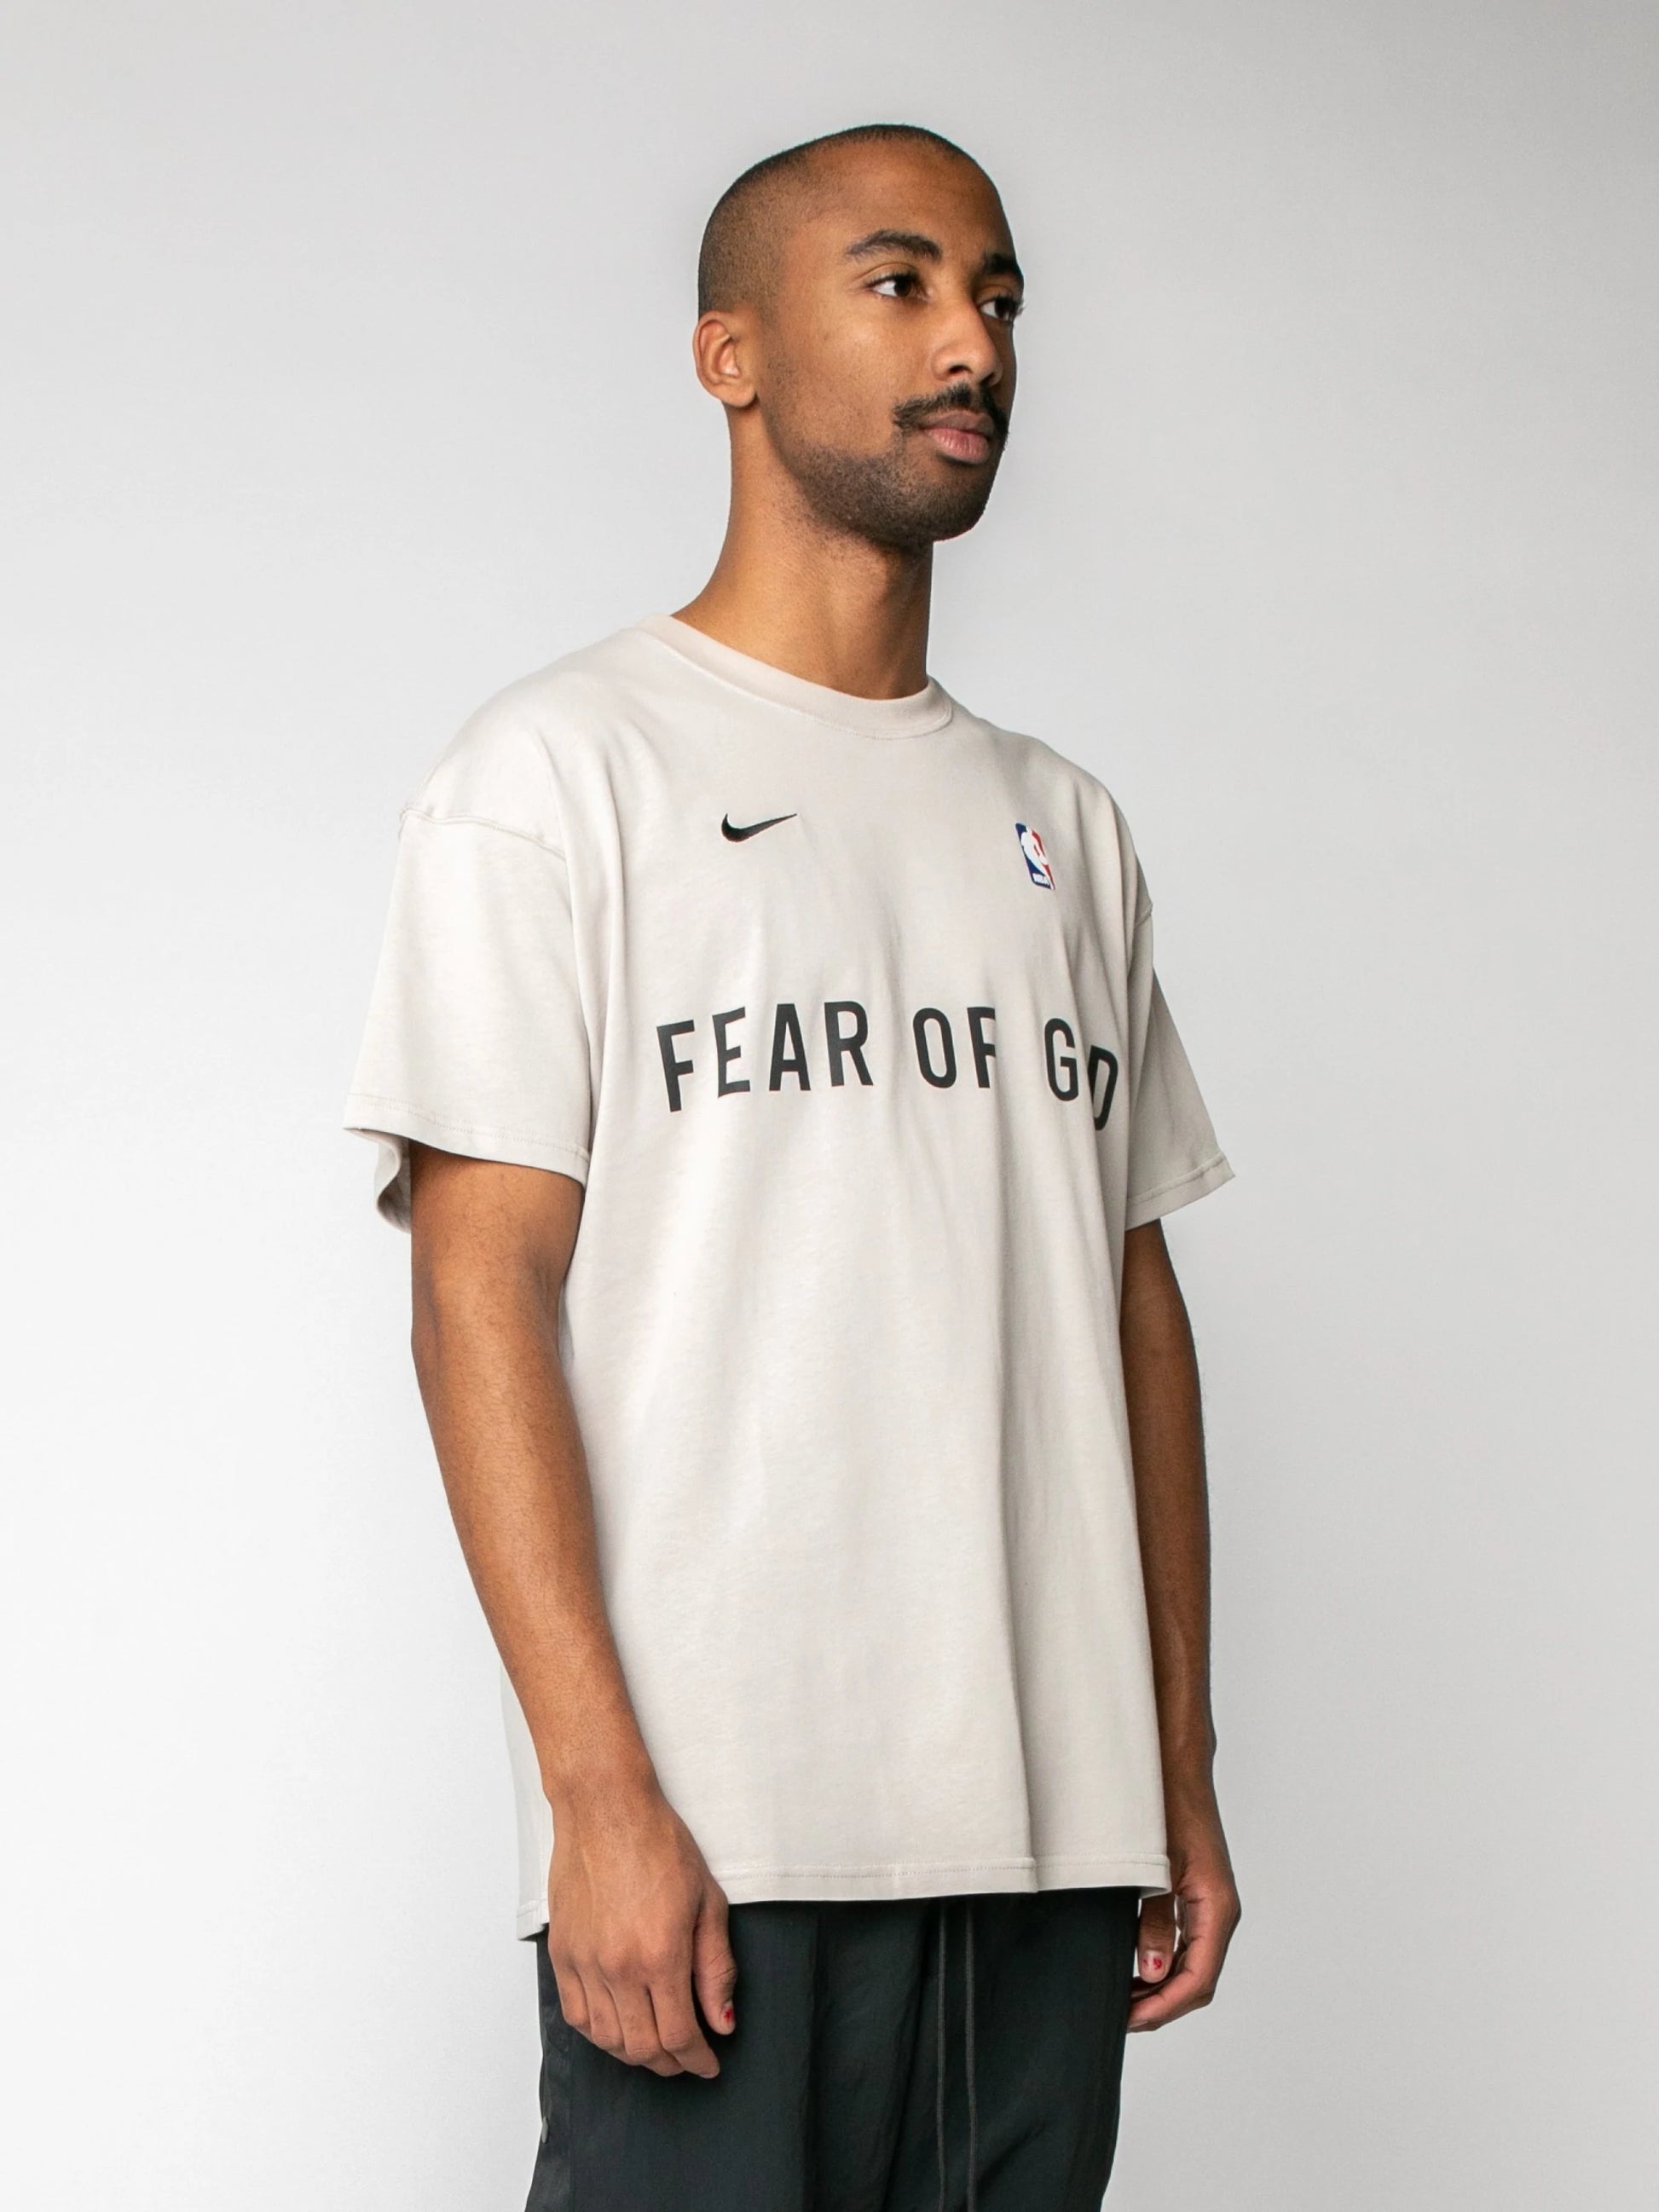 Nike FOG Fear of God Tシャツ 4枚セット | www.150.illinois.edu